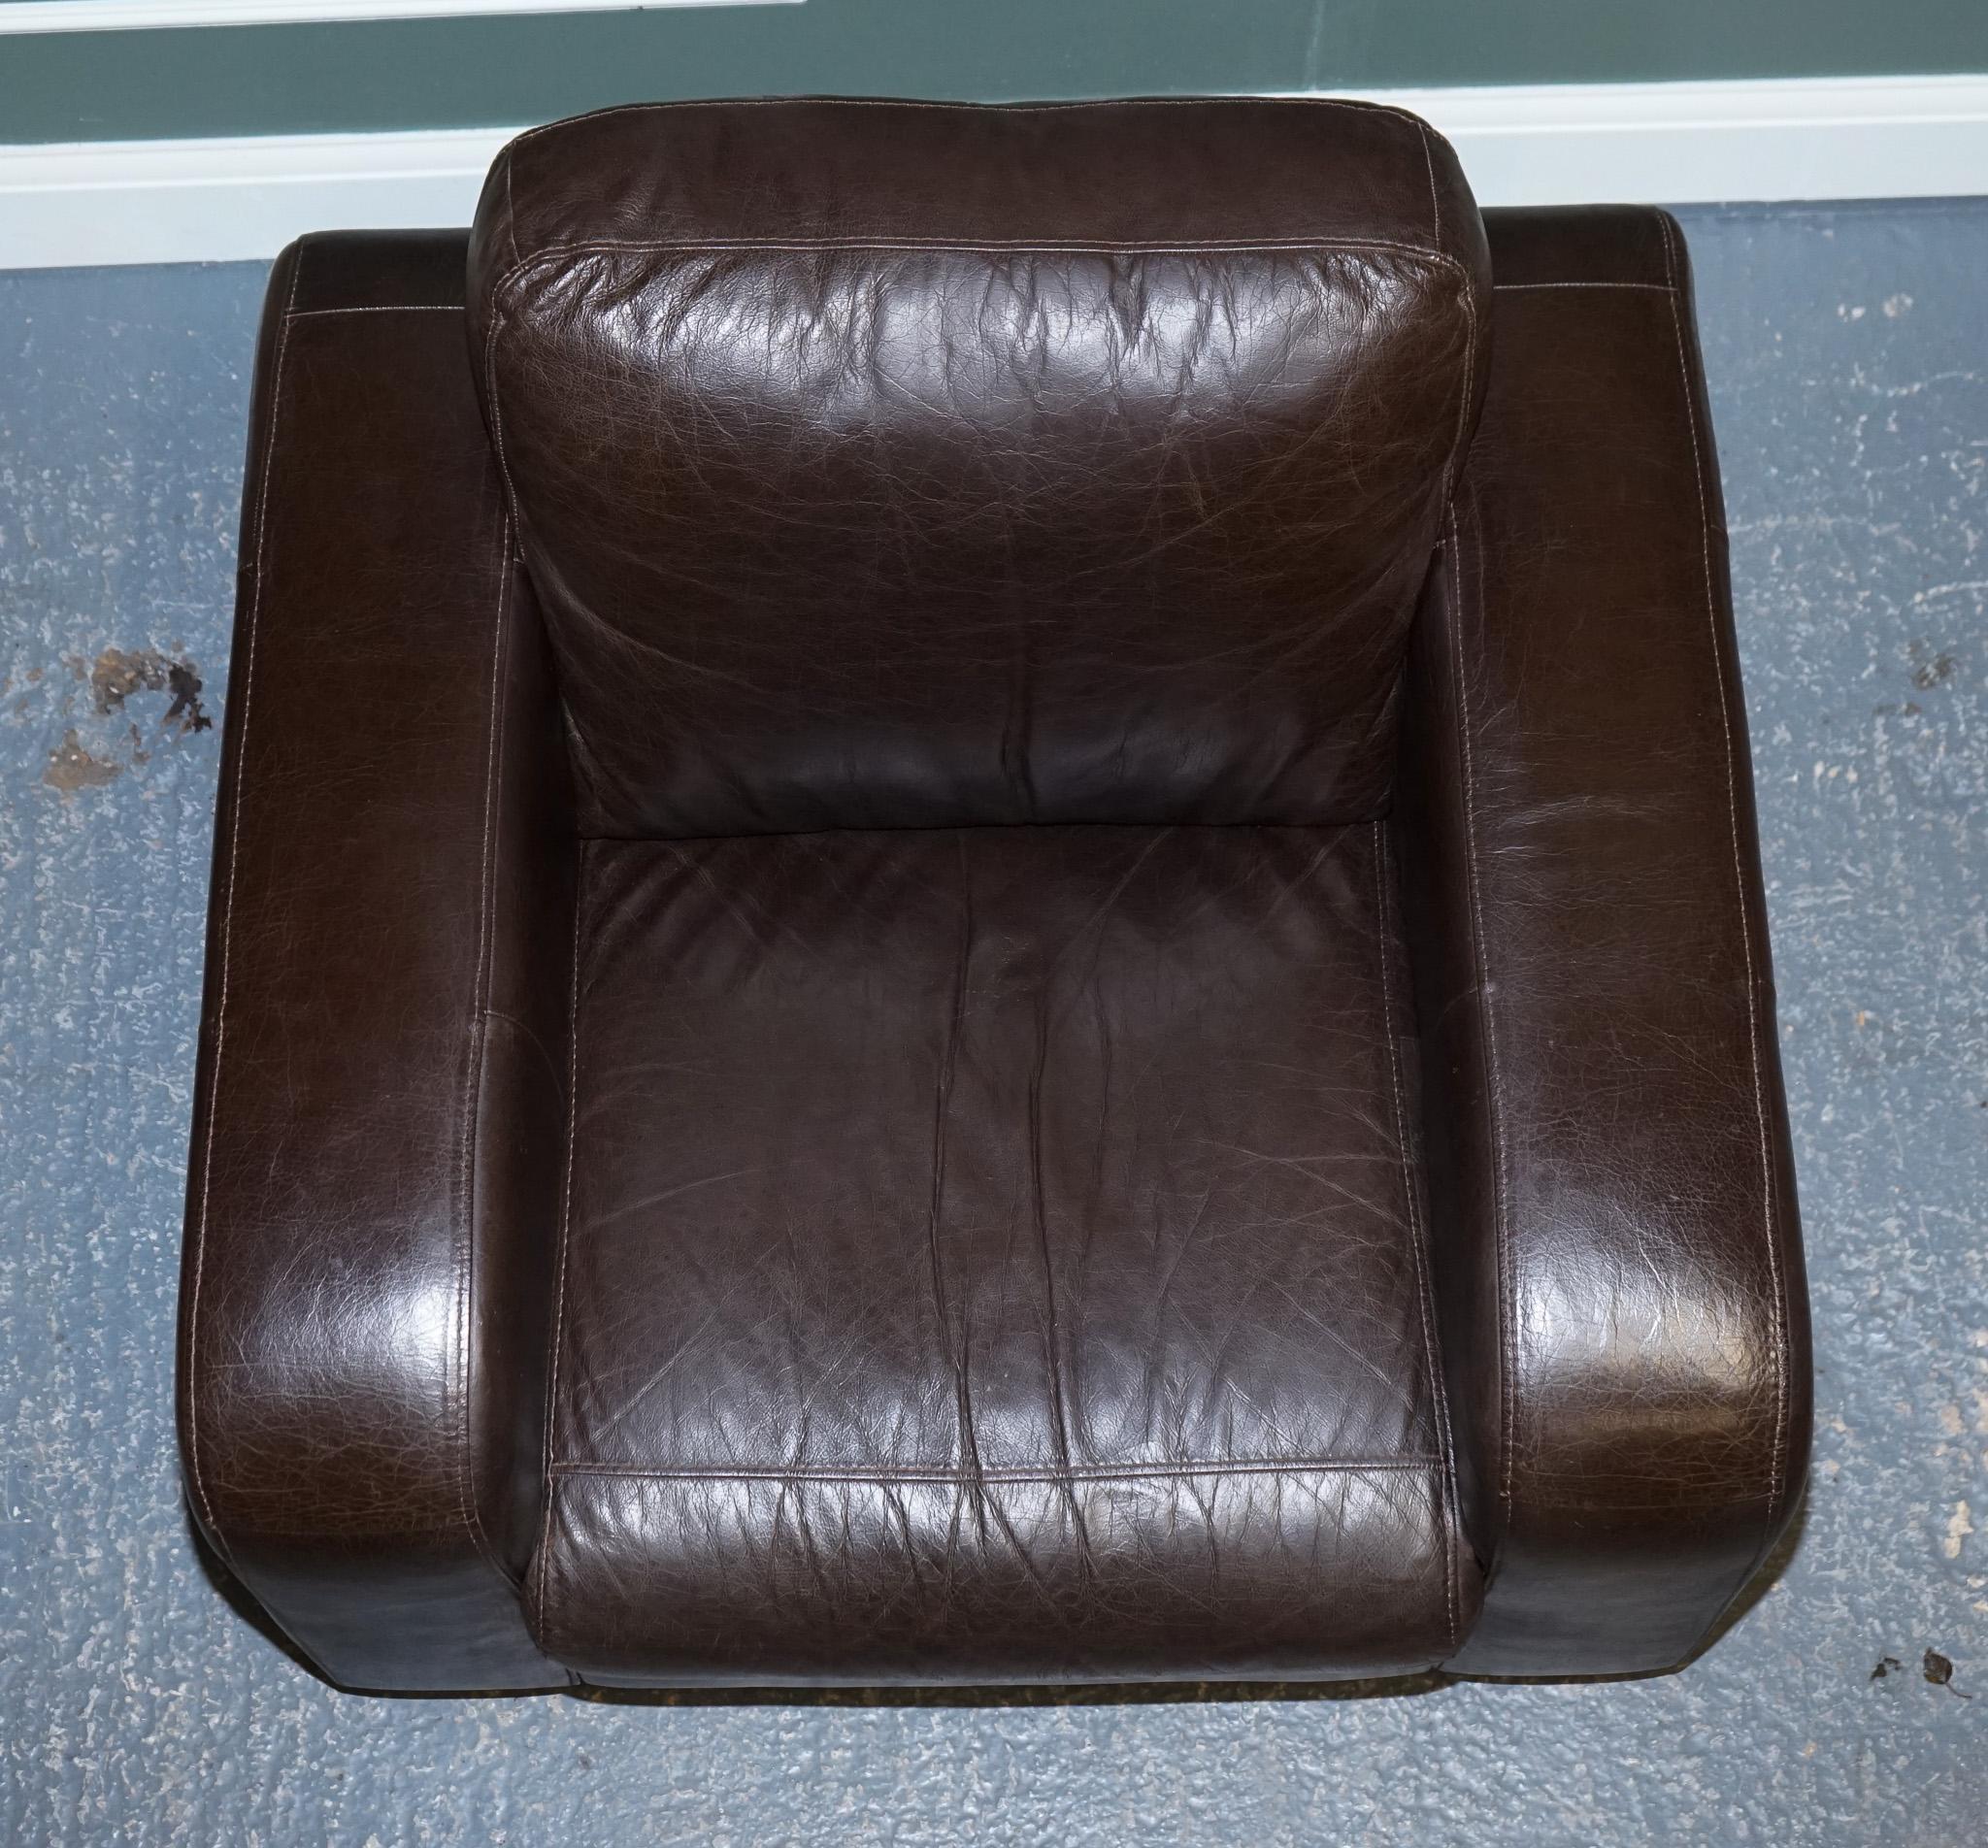 sofitalia leather chair